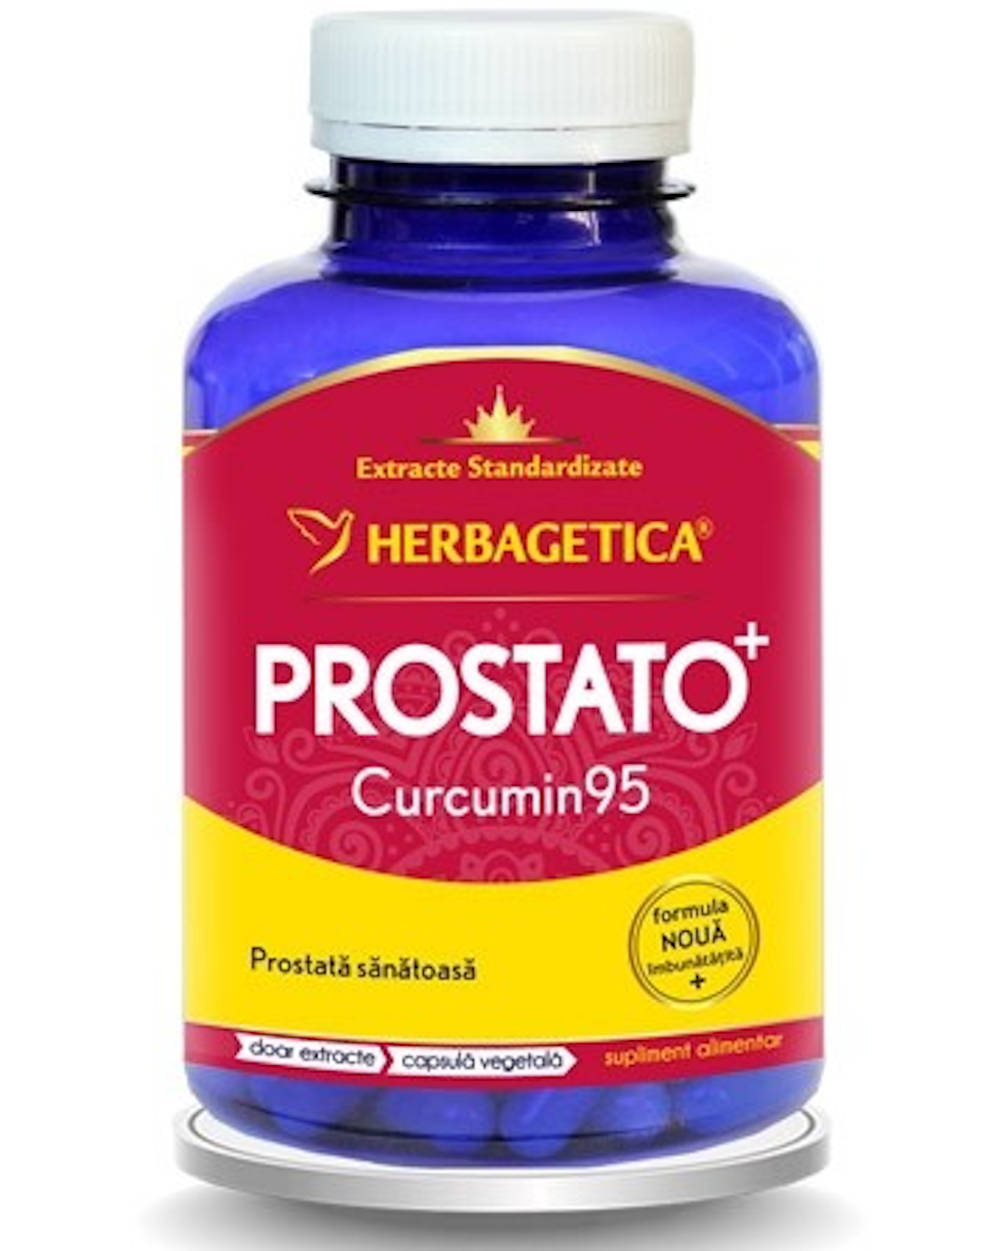 Prostato Curcumin 95 capsule pentru prostata